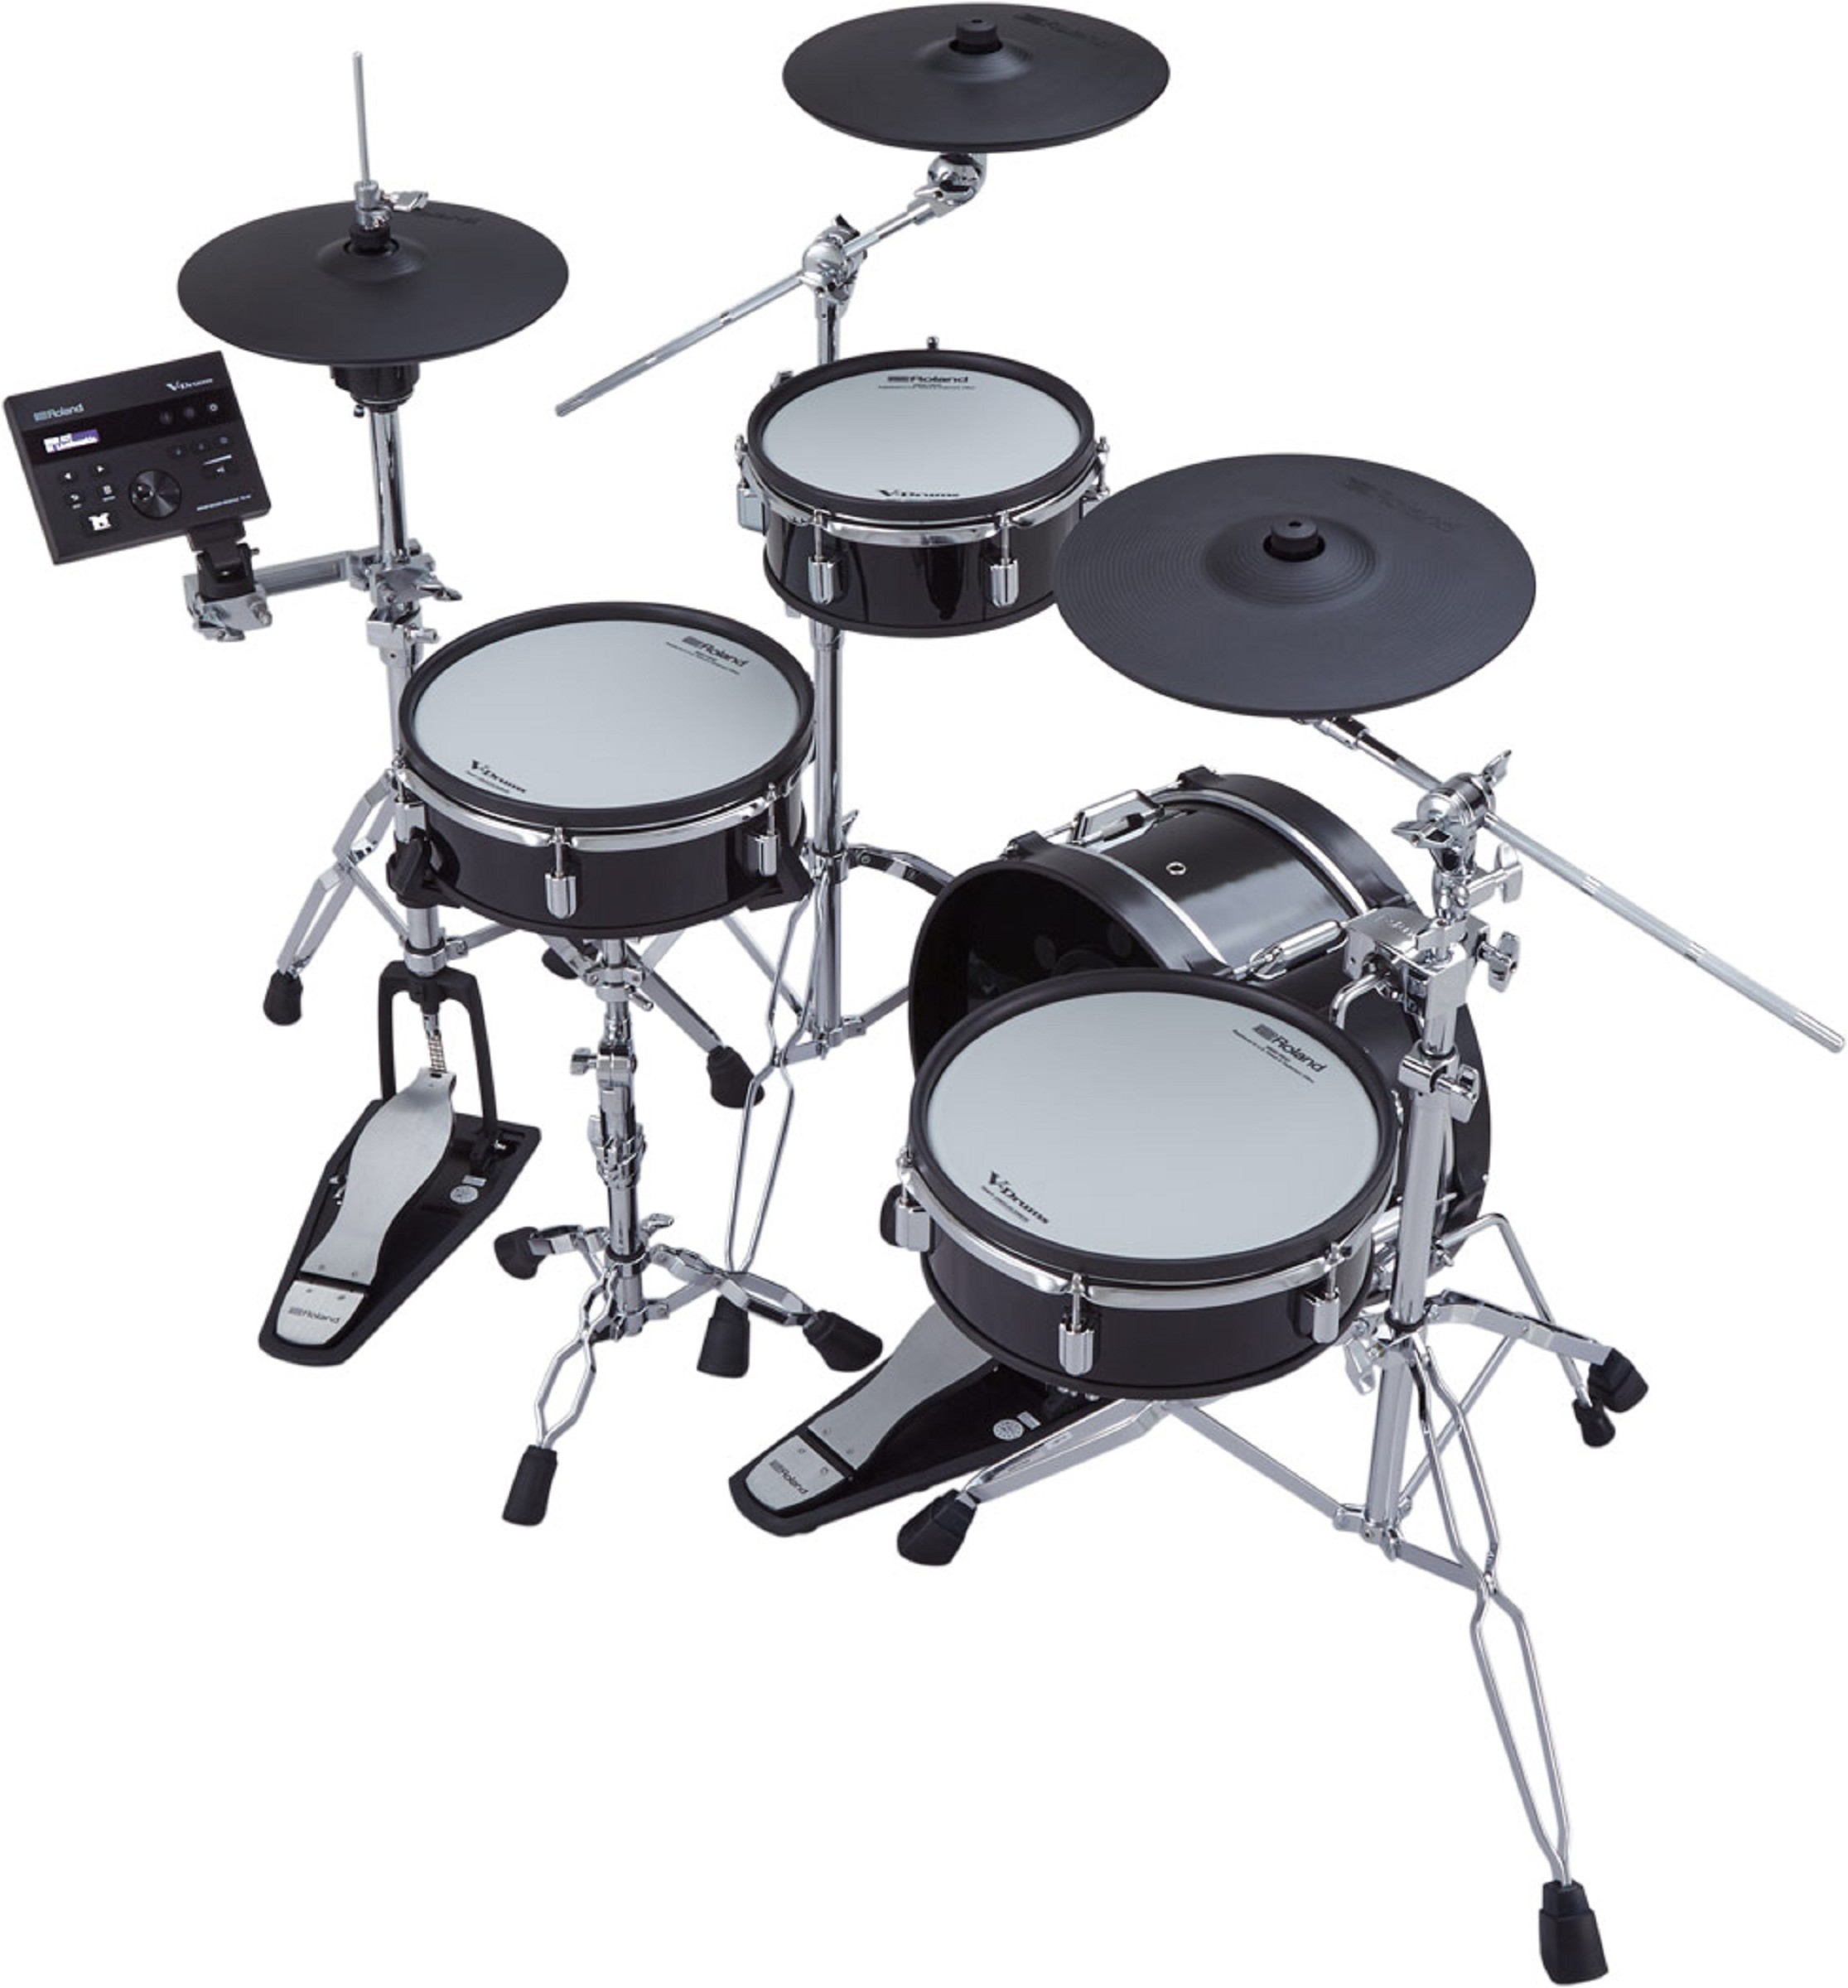 Roland VAD103 E-Drum Kit